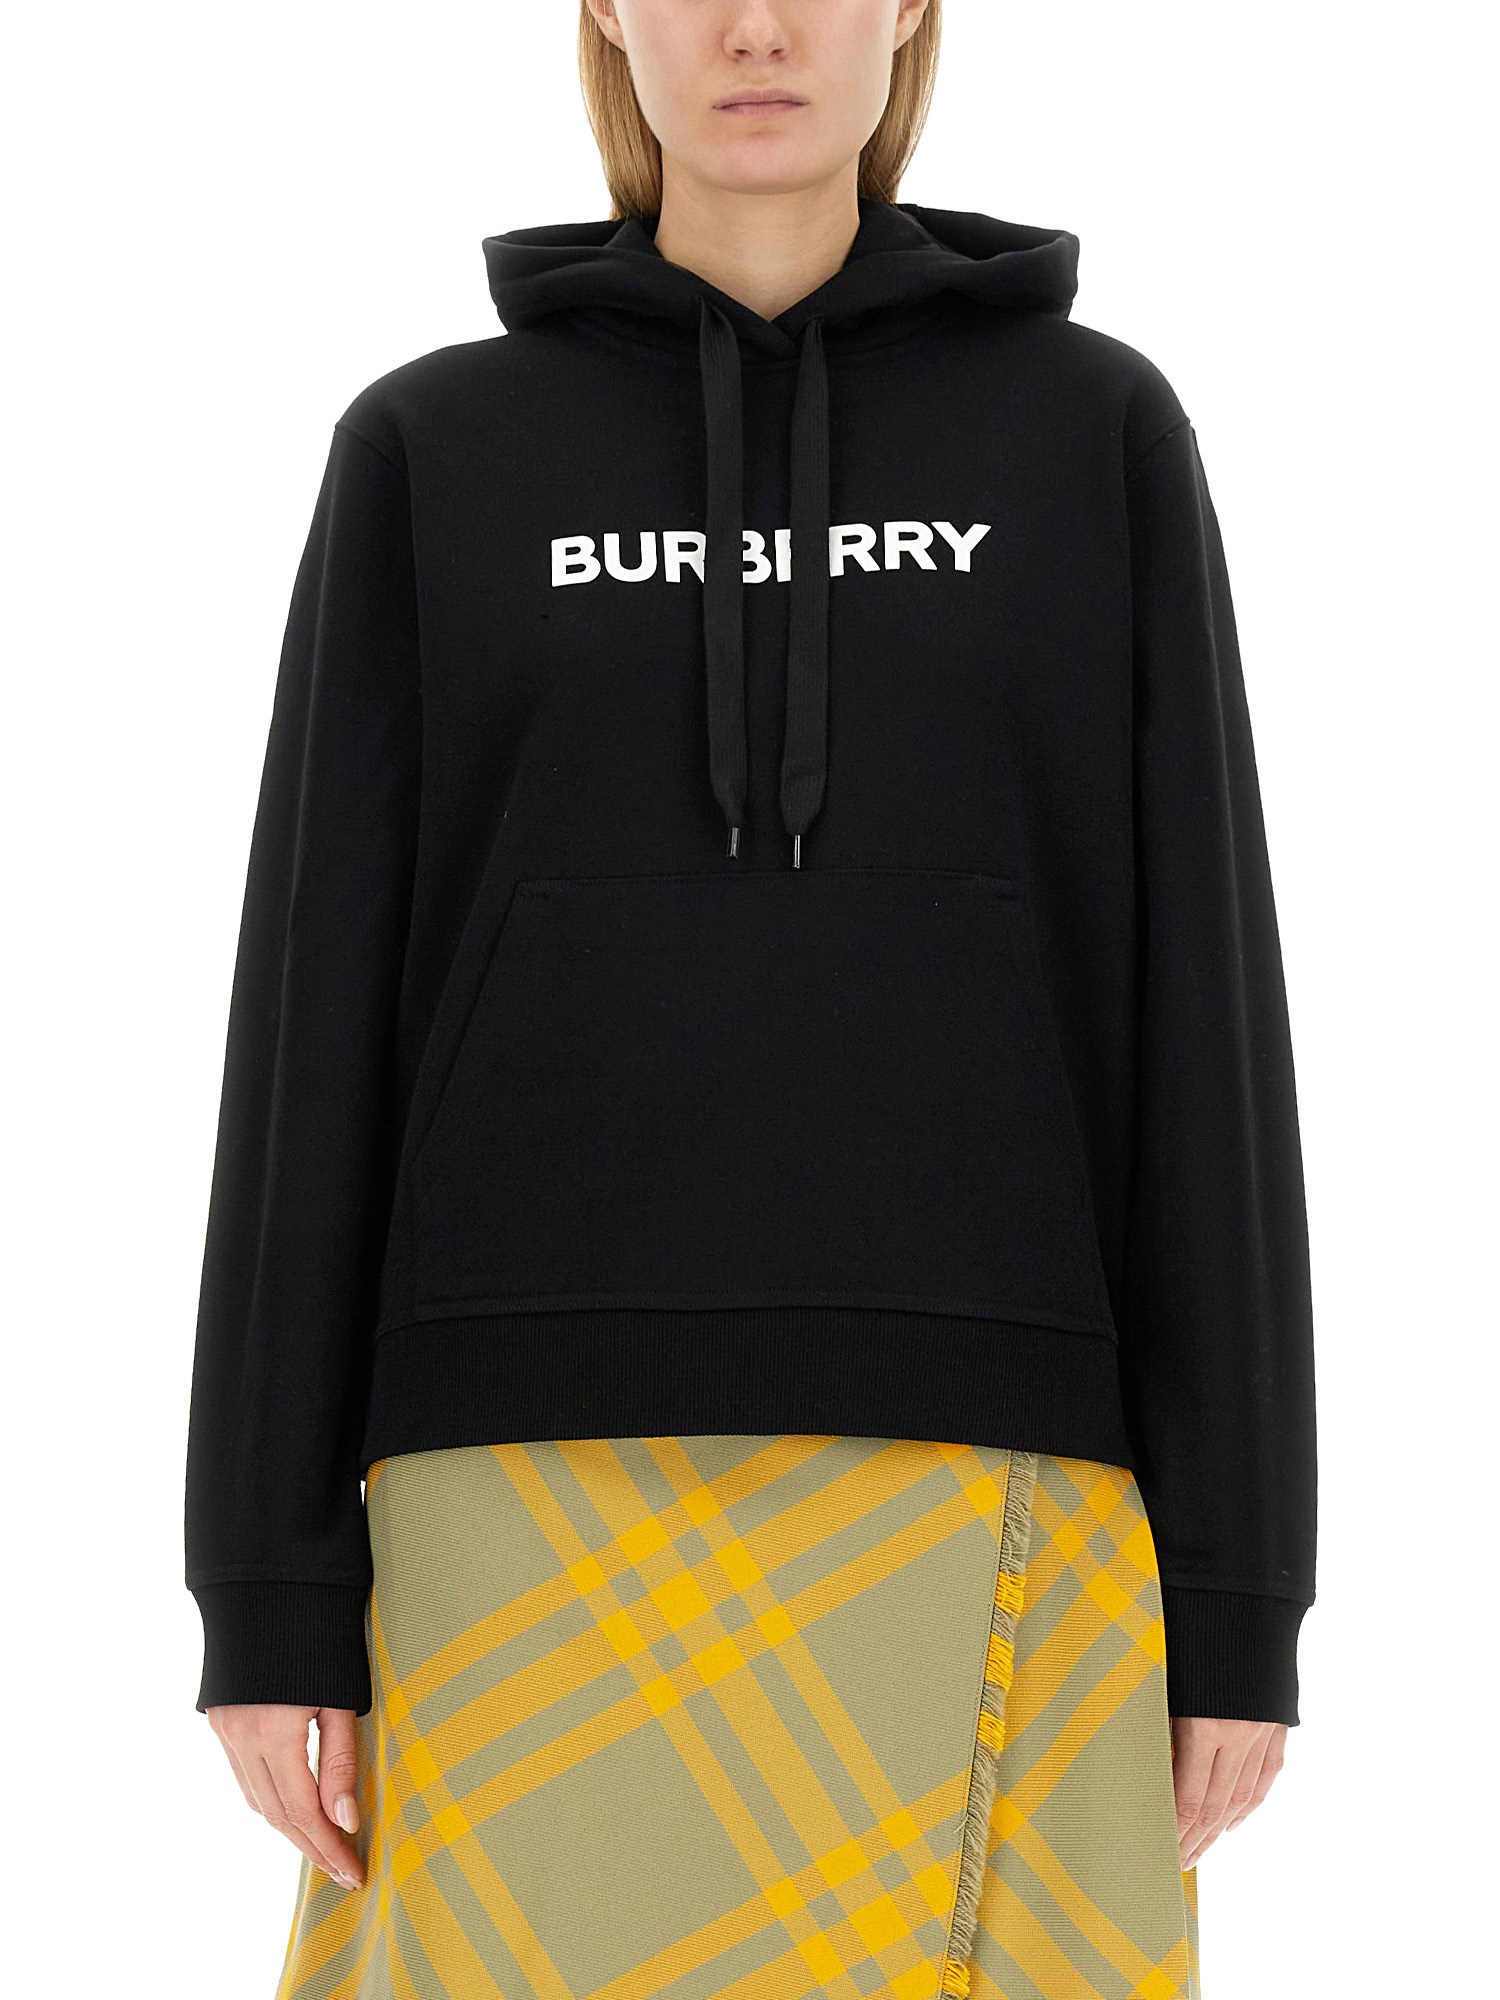 burberry sweatshirt with logo